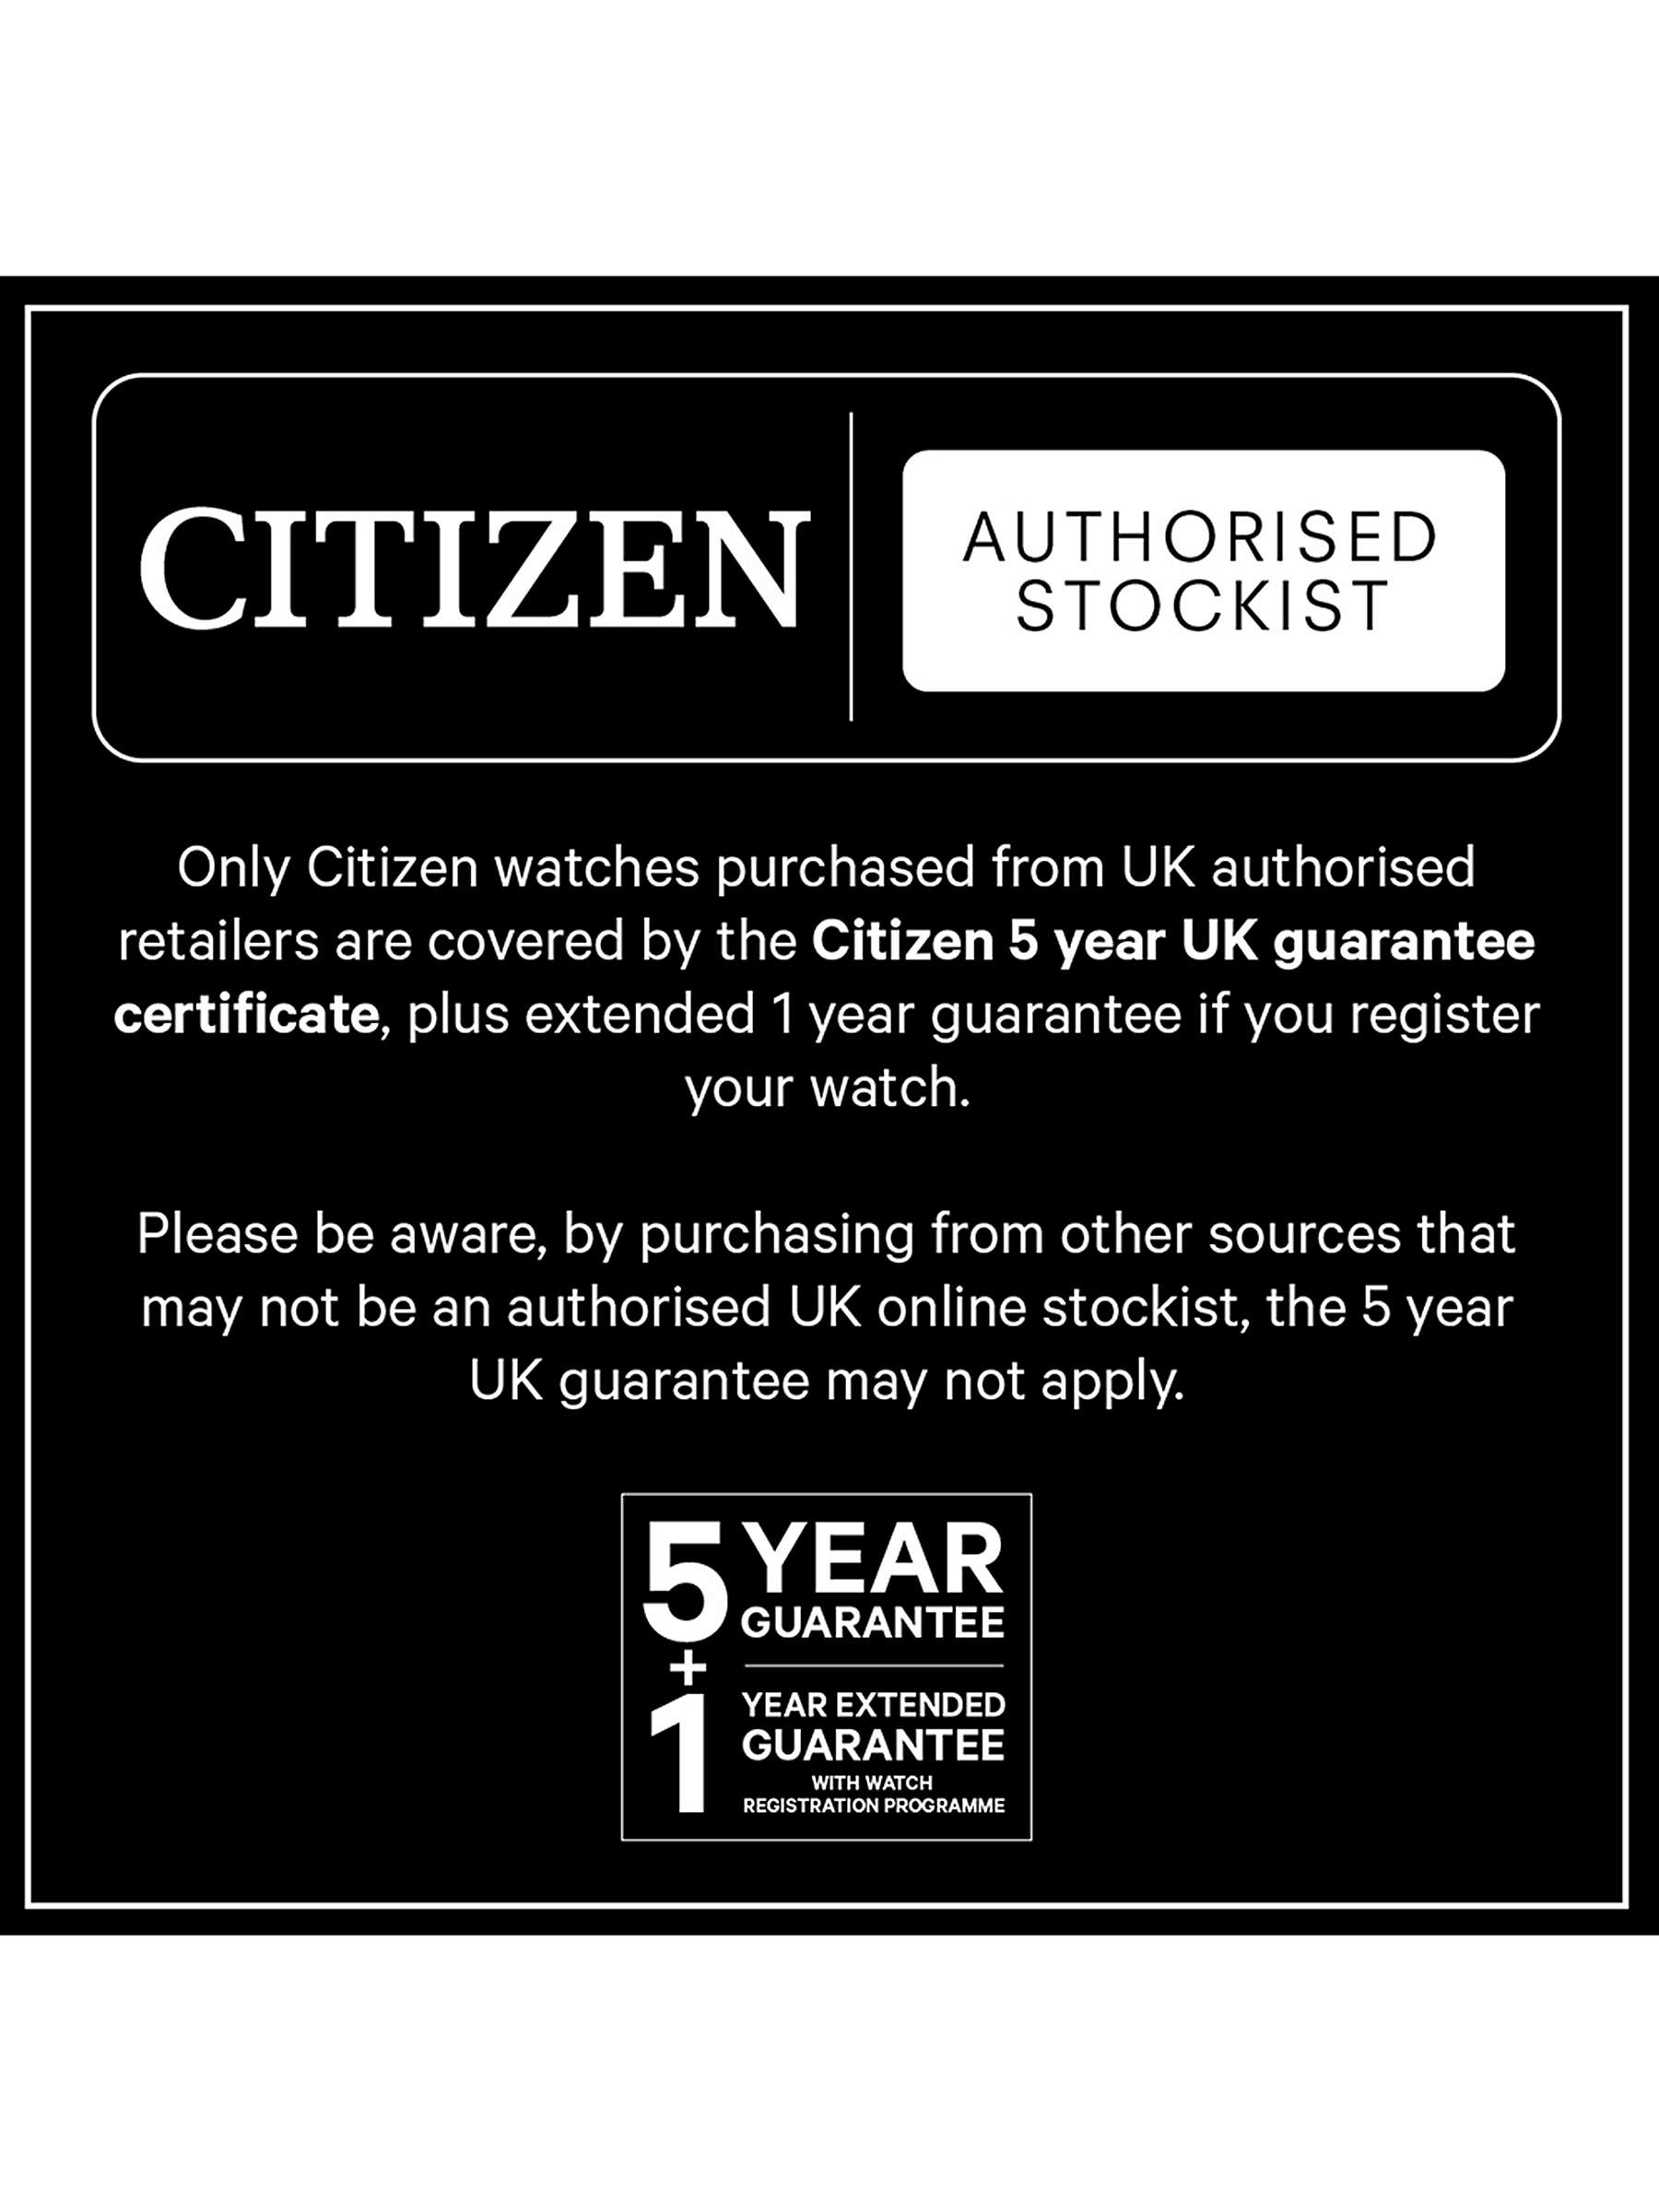 Buy Citizen BM8240-11A Men's Eco-Drive Date Leather Strap Watch, Black/White Online at johnlewis.com